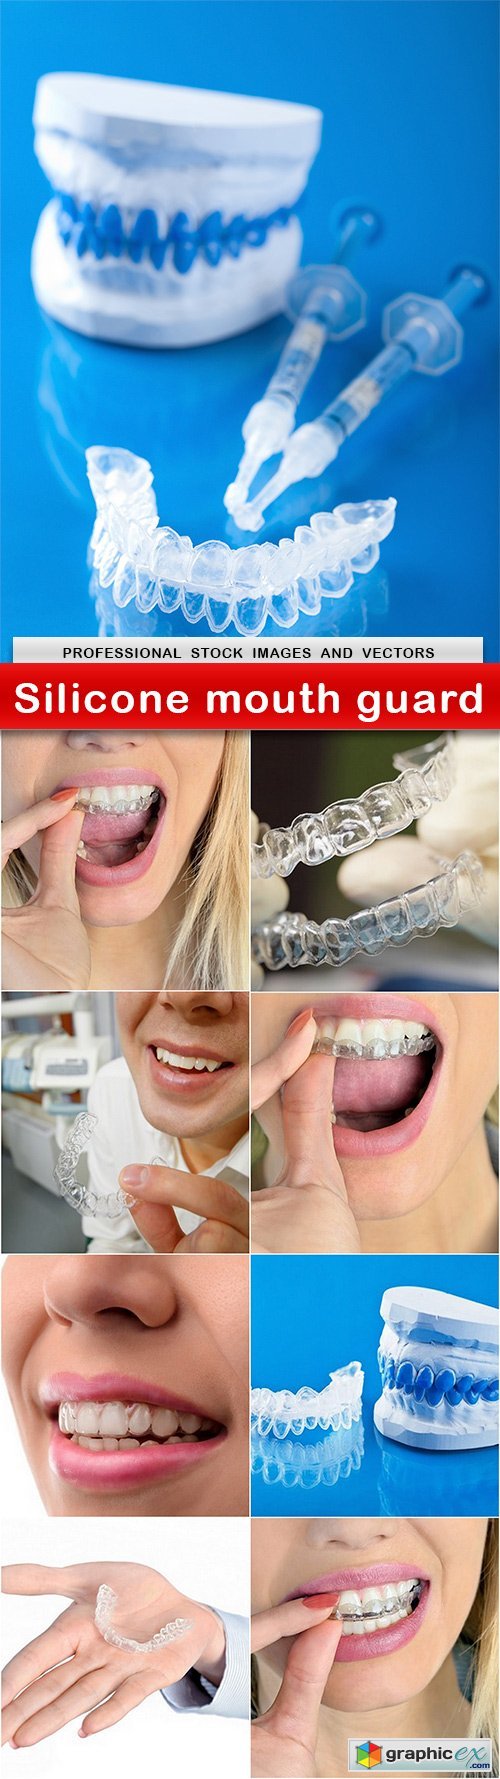 Silicone mouth guard - 9 UHQ JPEG